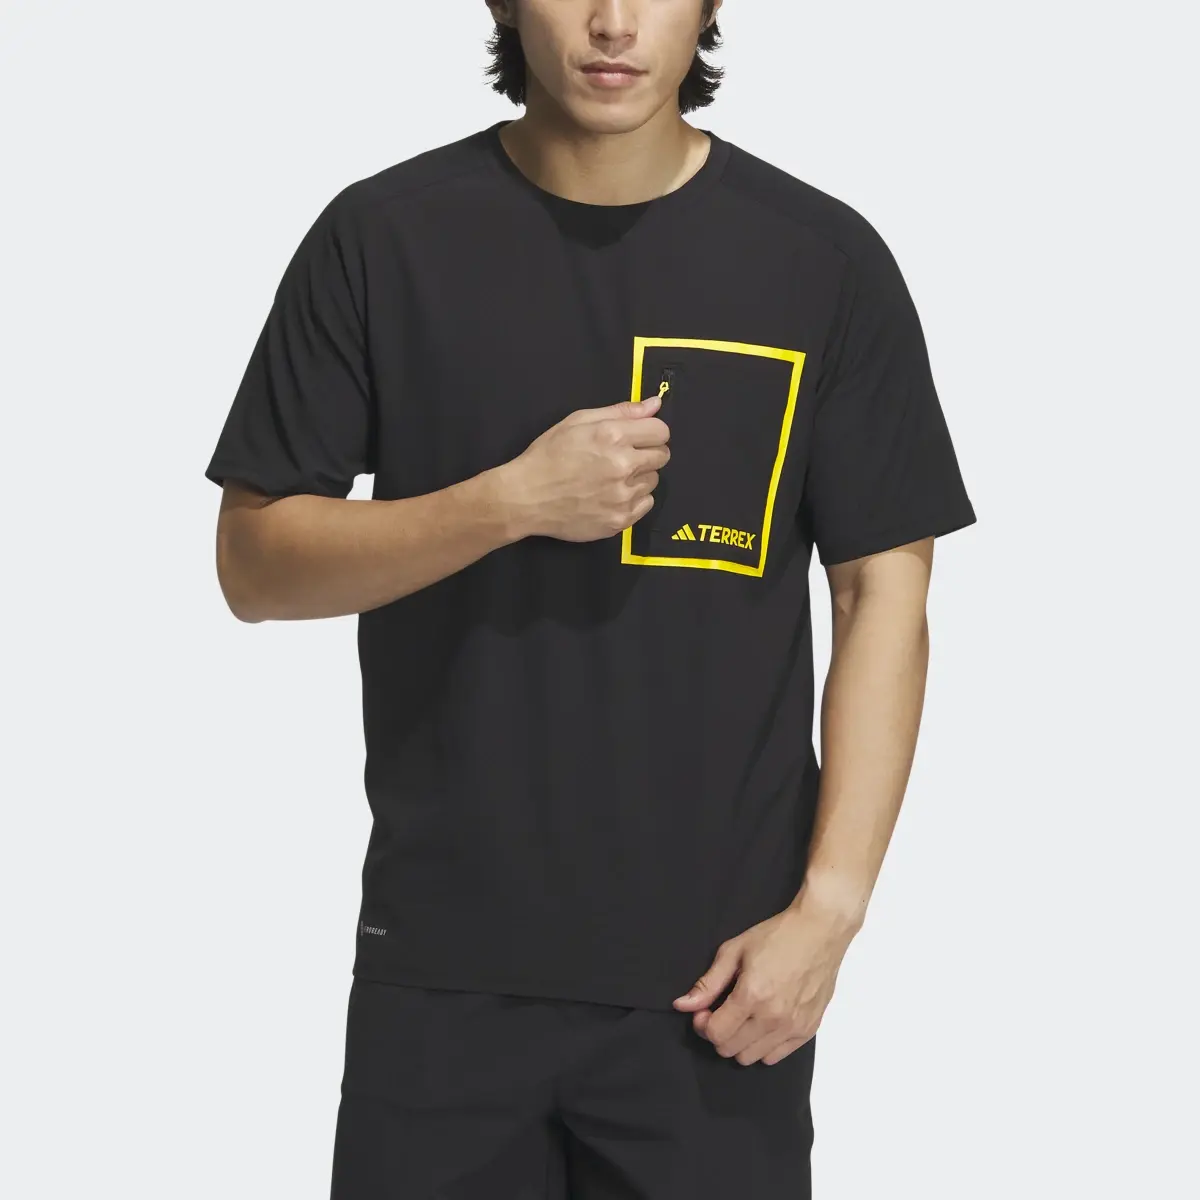 Adidas National Geographic T-Shirt. 1